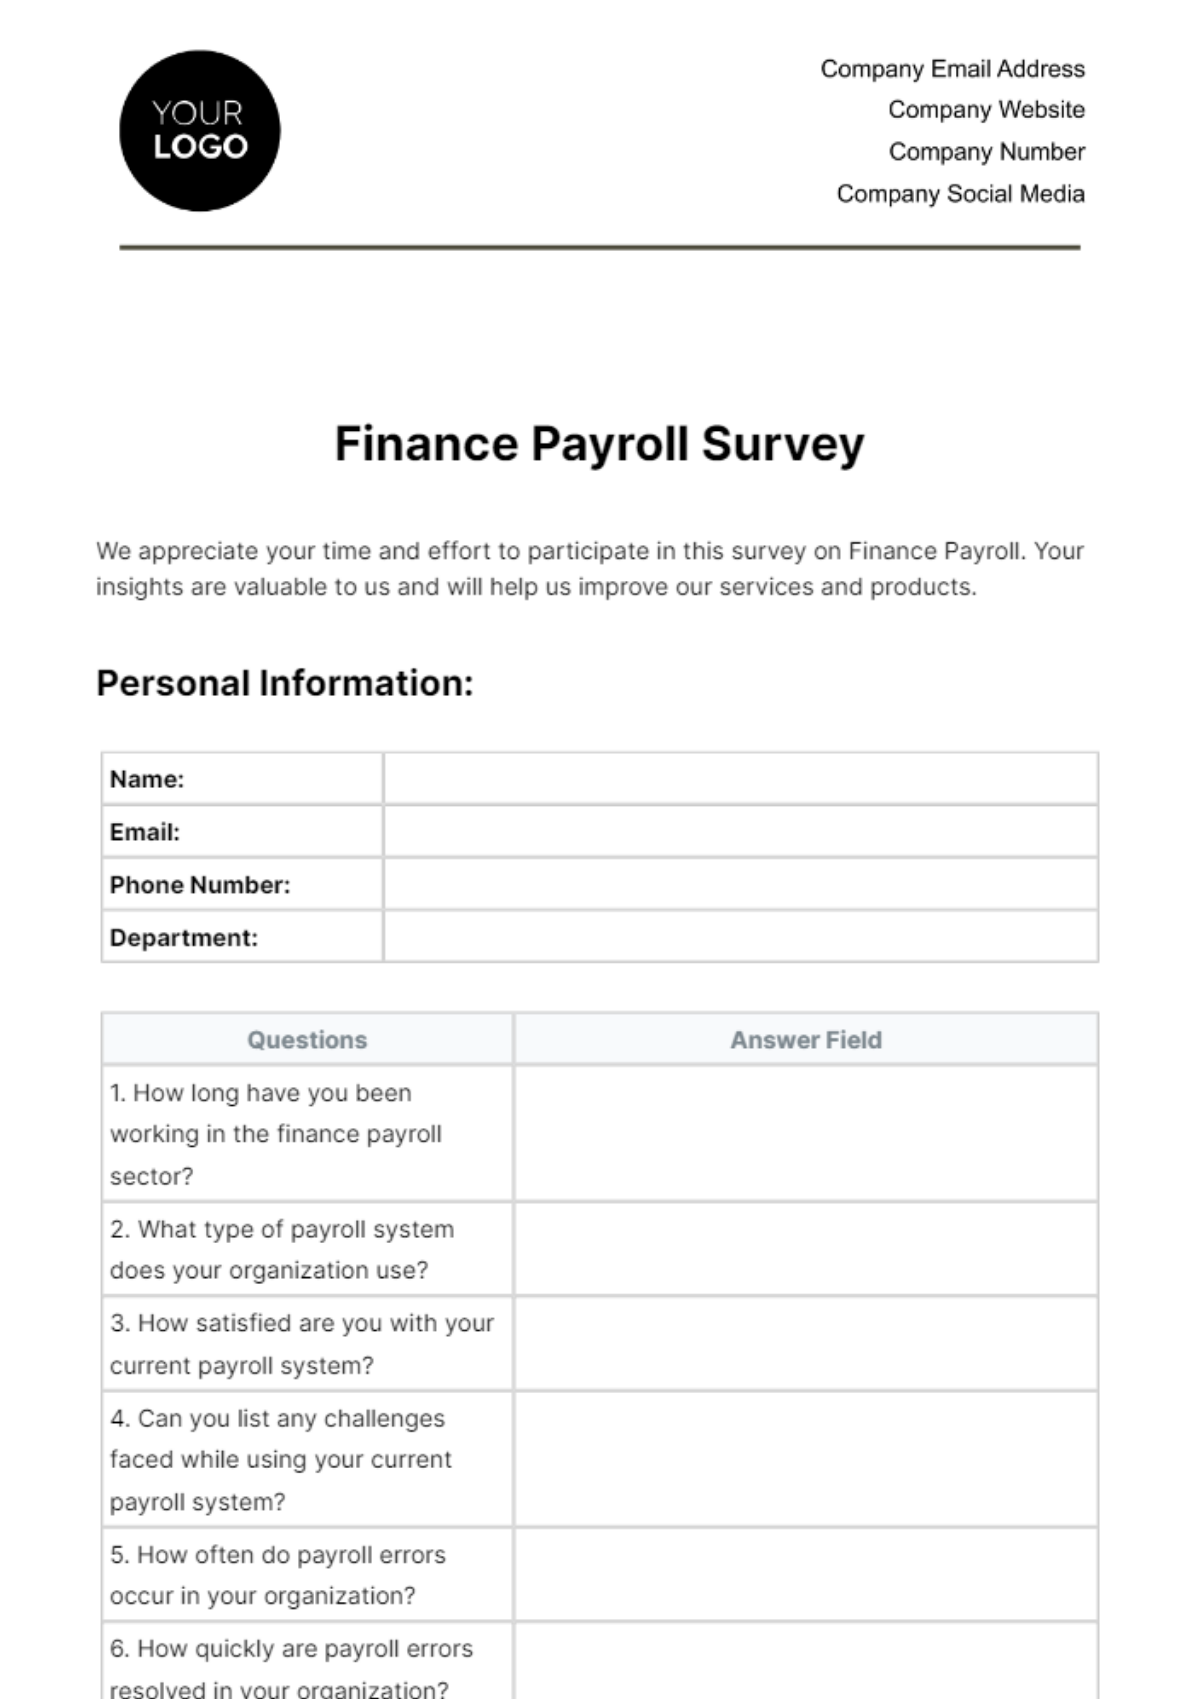 Free Finance Payroll Survey Template